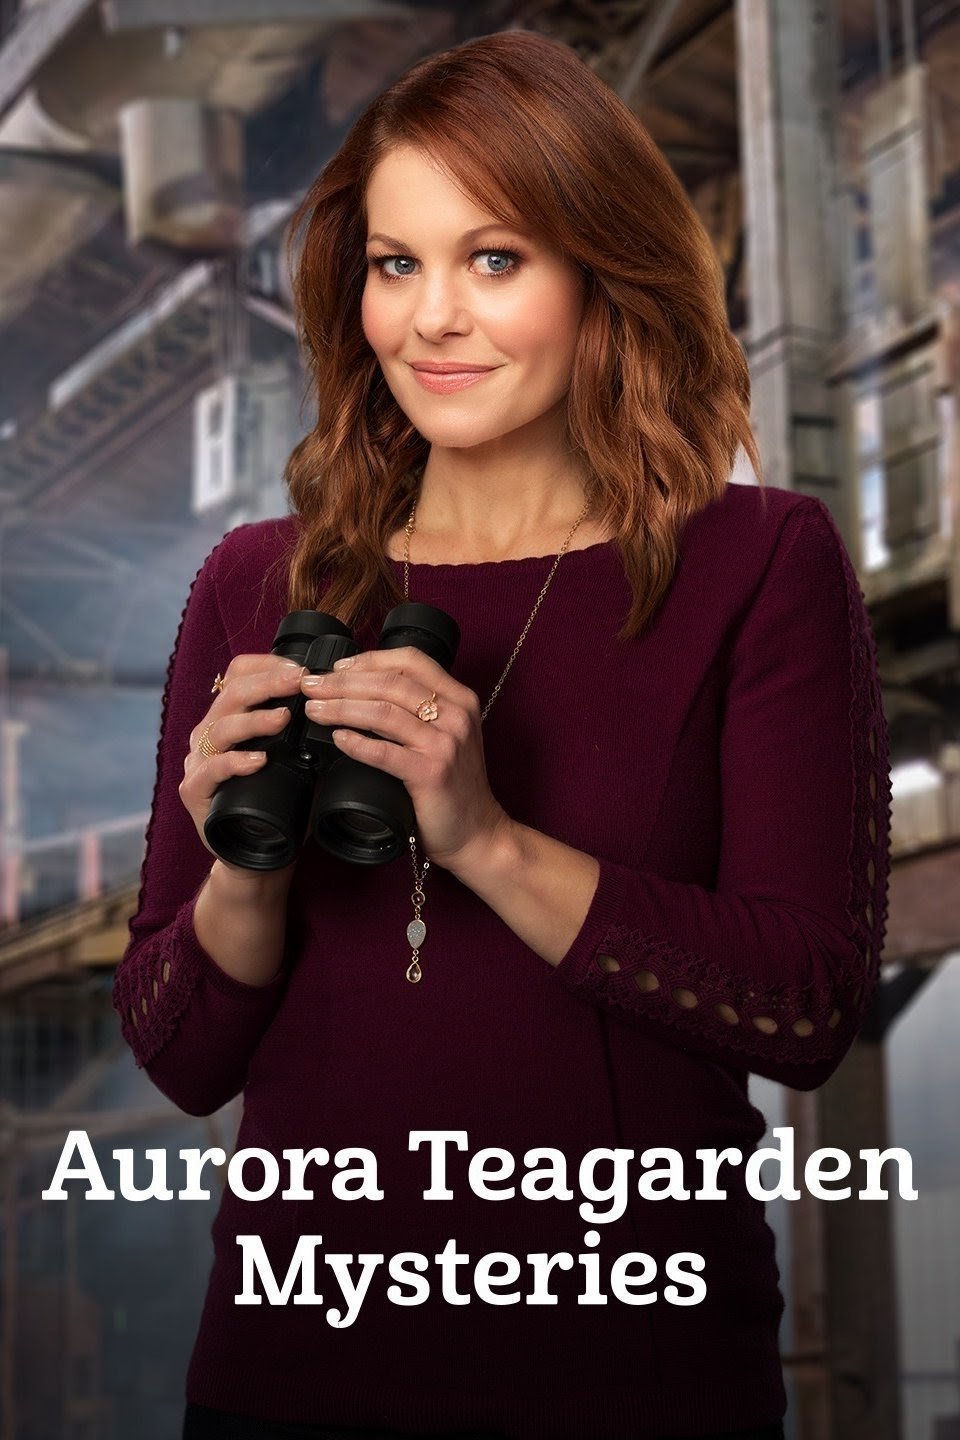 Poster of the movie Aurora Teagarden Mysteries